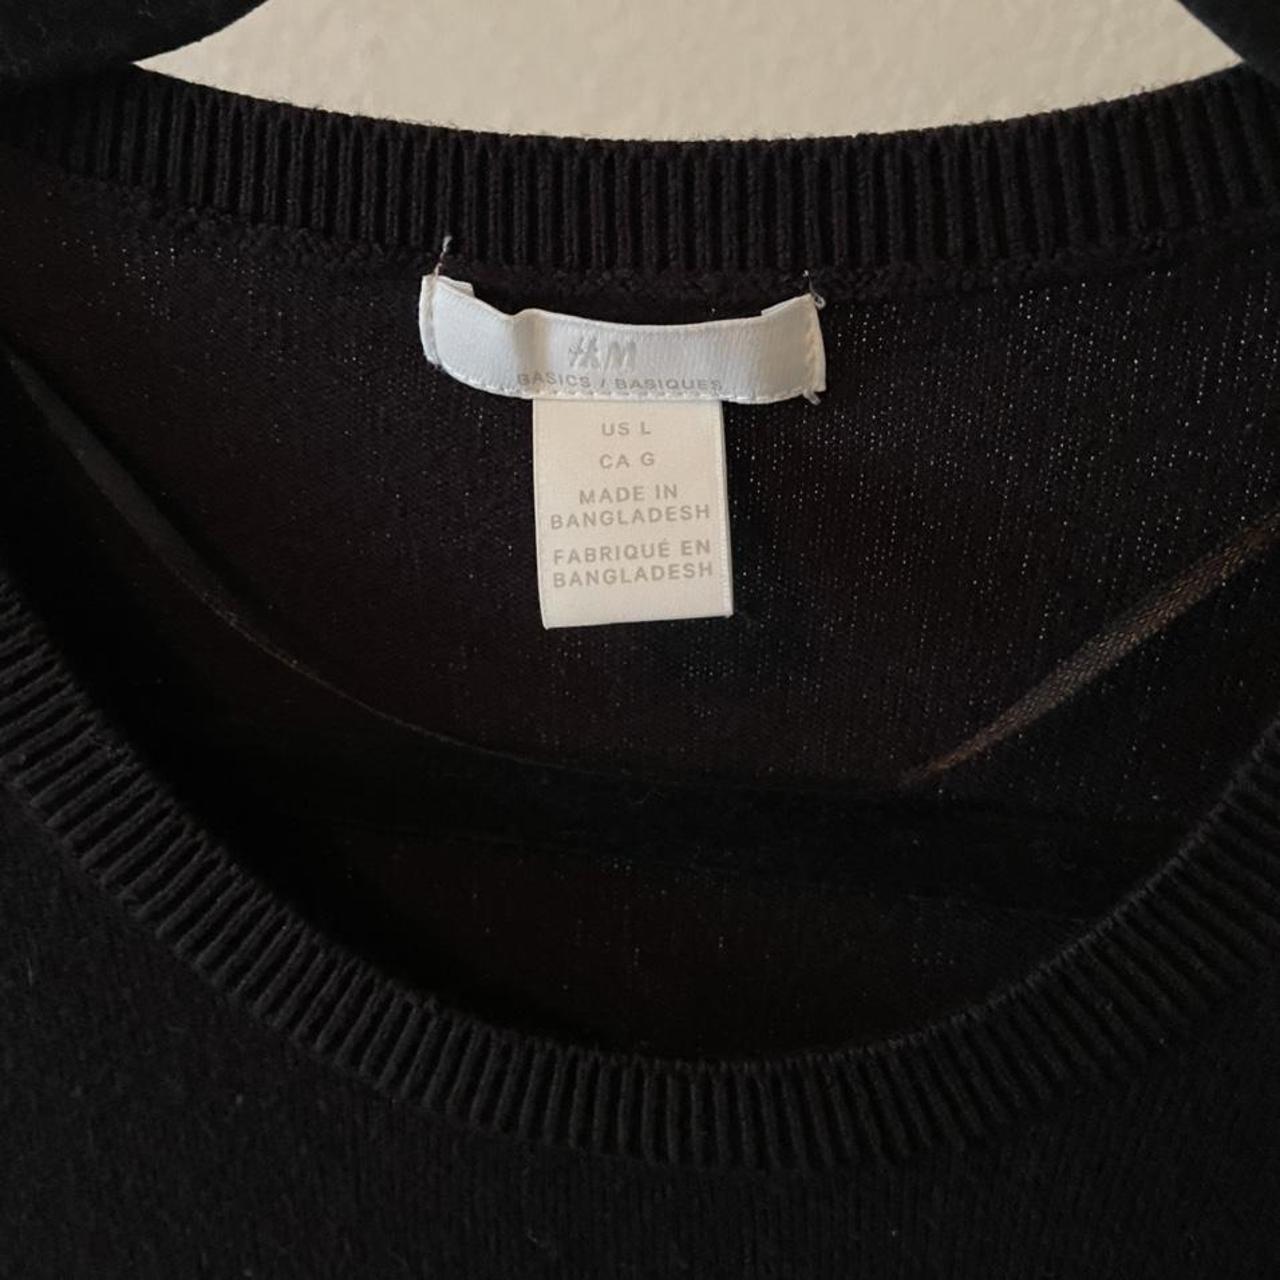 Product Image 3 - H&M black knitted crewneck sweatshirt
Lightweight